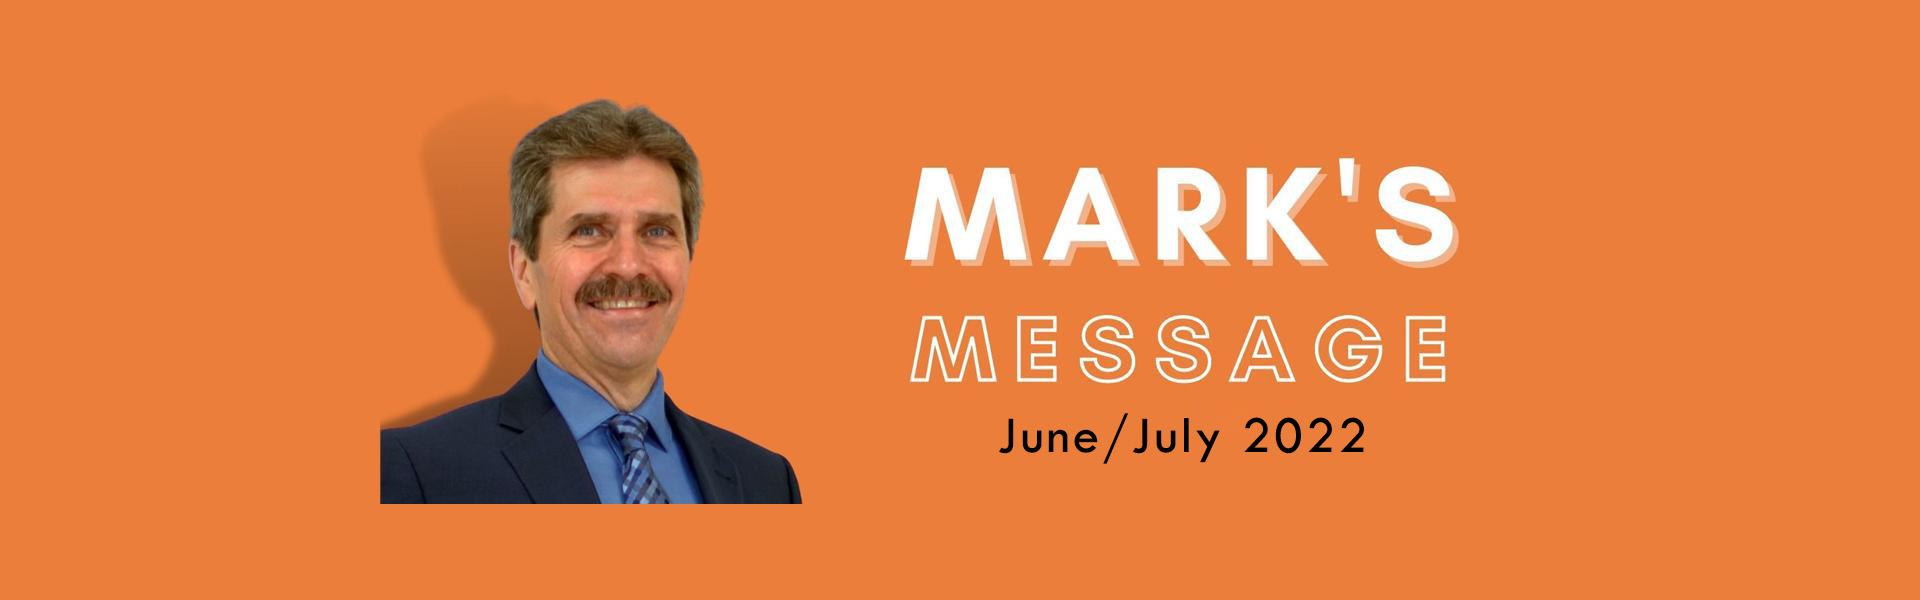 Mark's Message Header June/July 2022